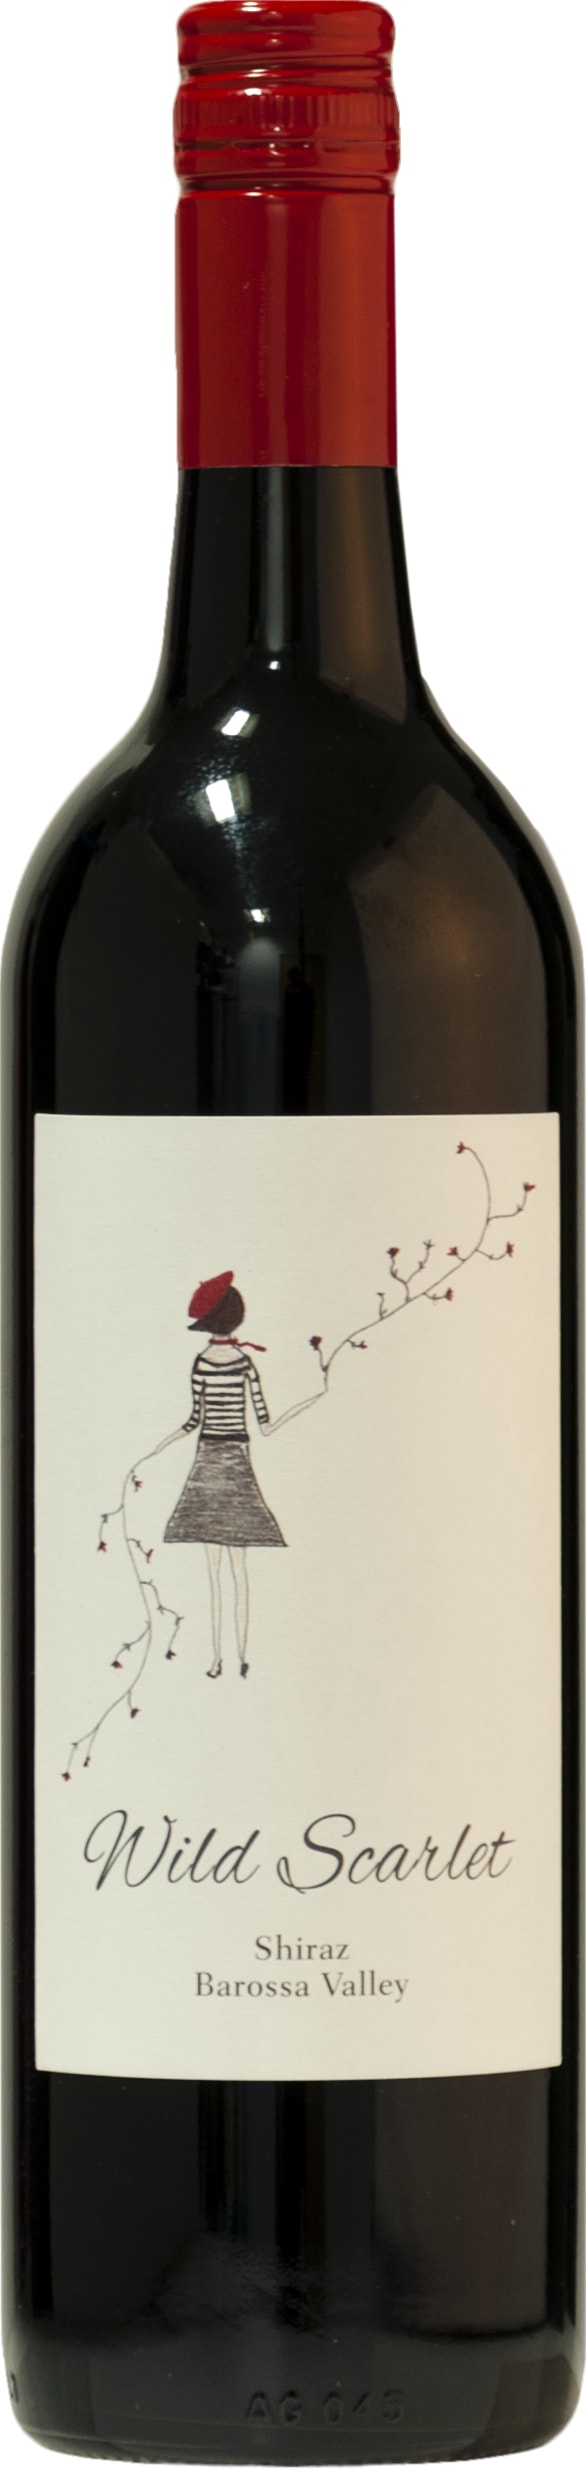 Rojomoma Wild Scarlet Shiraz 2021 75cl - Buy Rojomoma Wines from GREAT WINES DIRECT wine shop